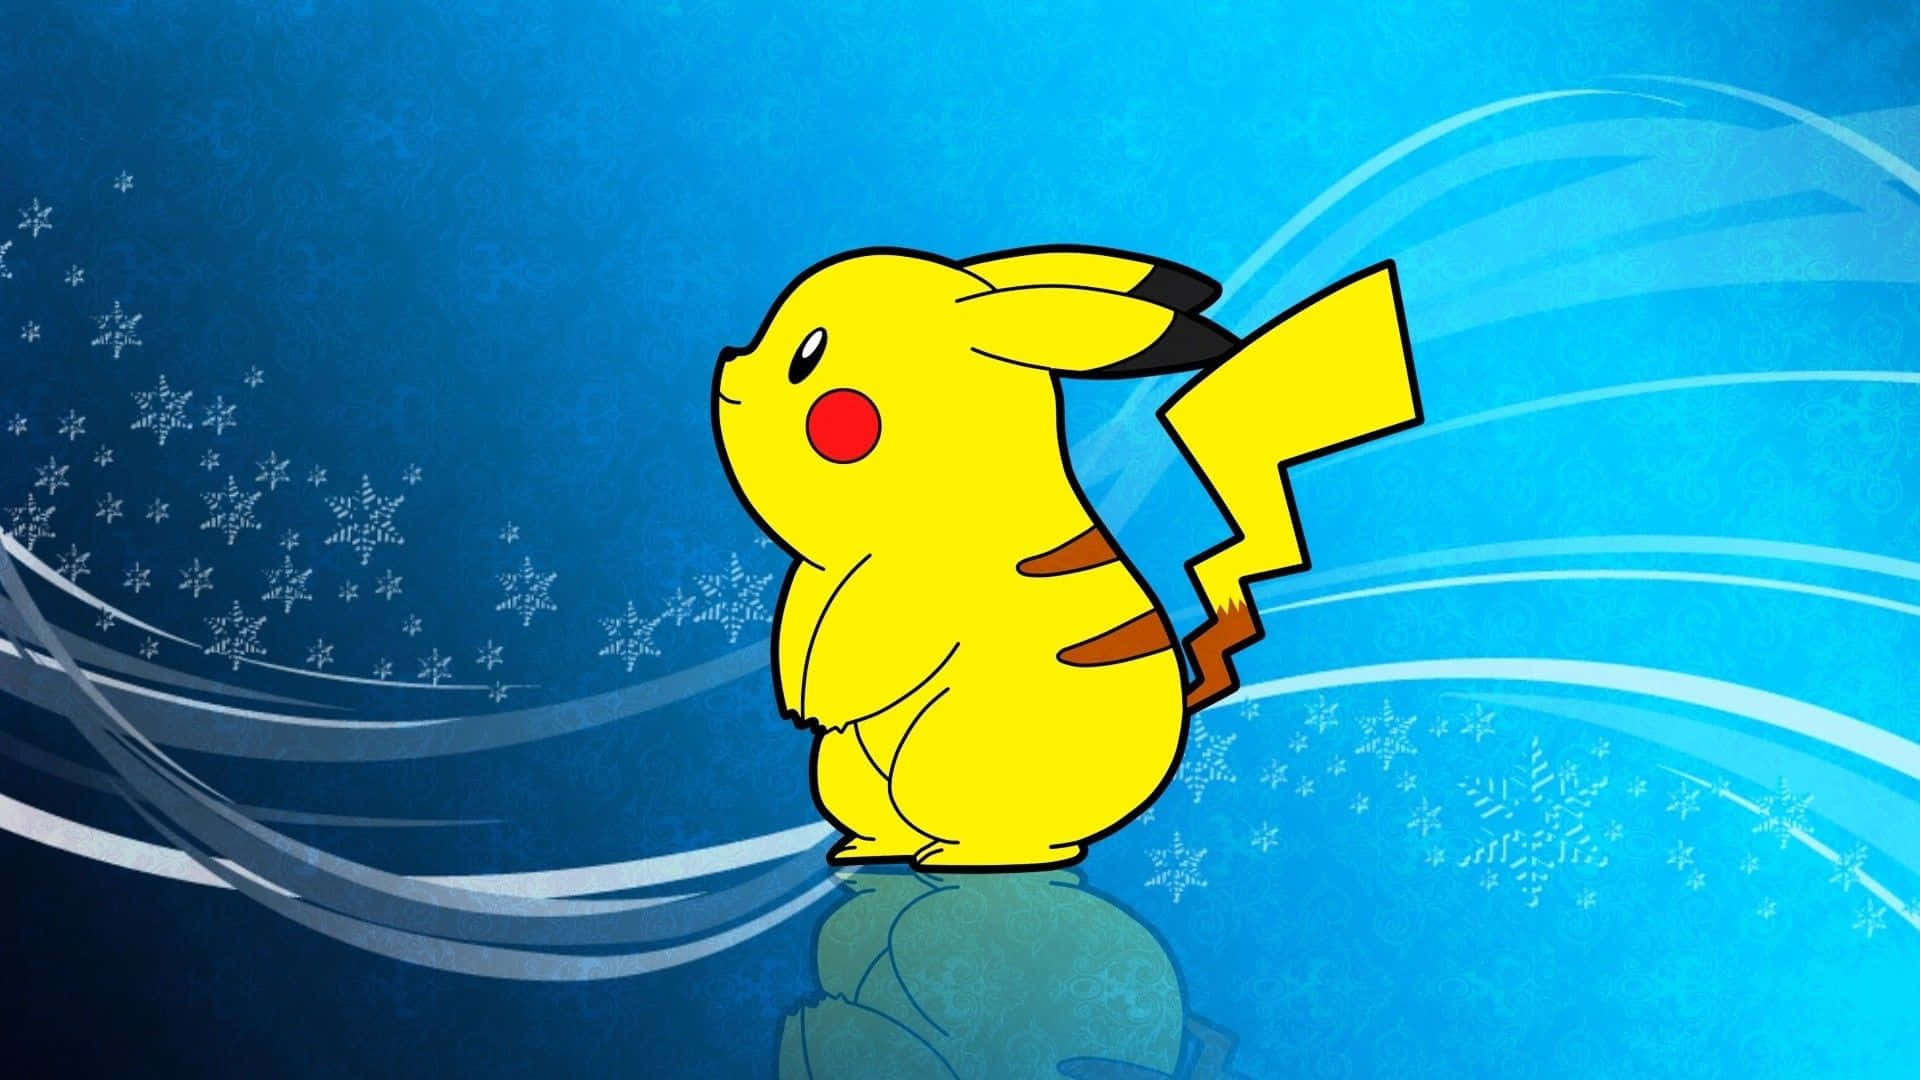 Pokémon Christmas Pikachu In Icy Blue Wallpaper